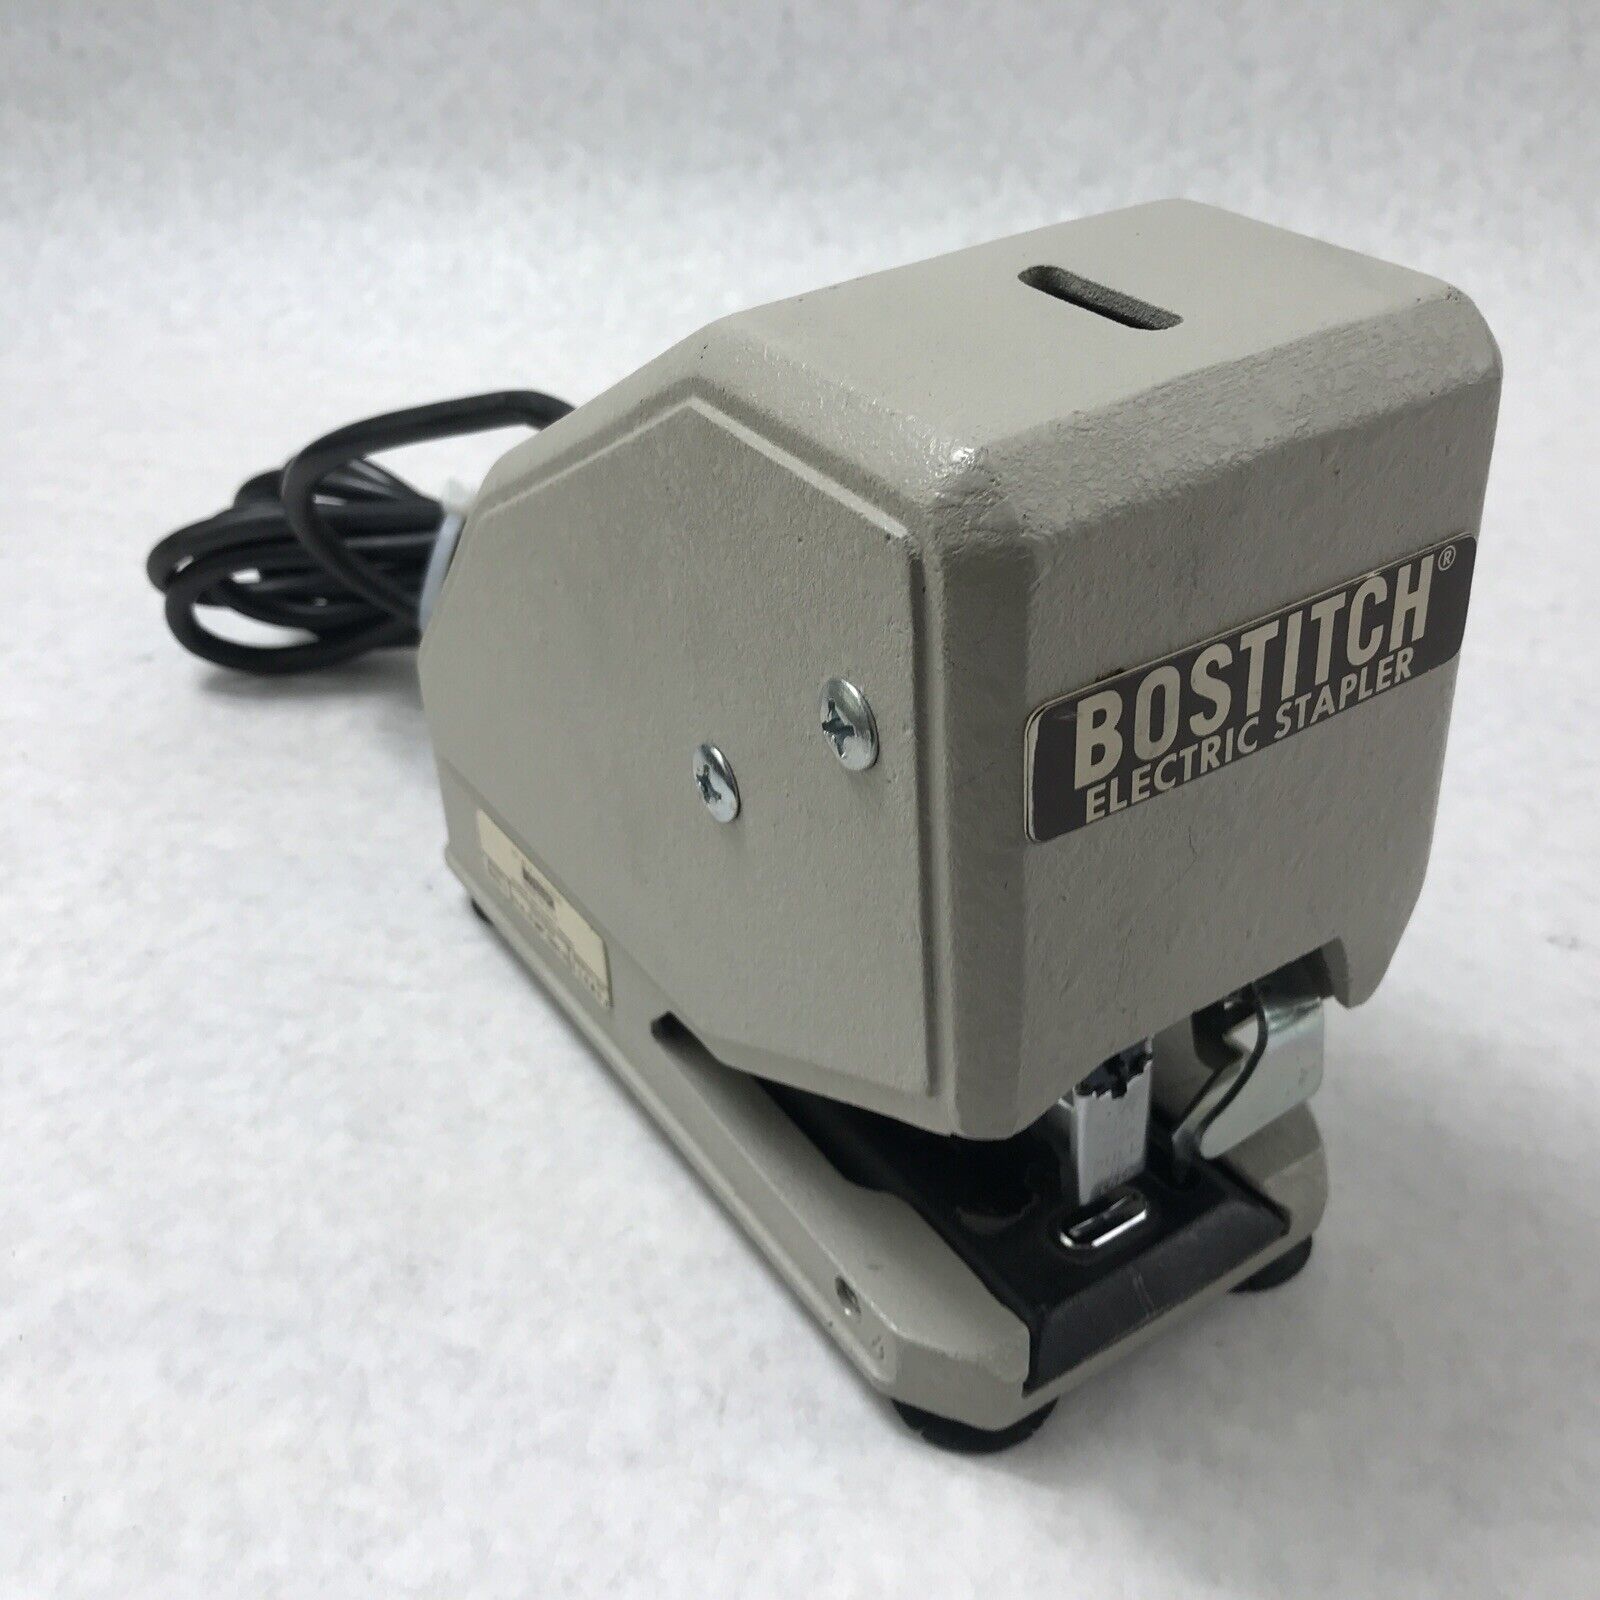 BOSTITCH B5E6J-3 electric Stapler 110V Adjustable depth SB 19 1/4 staples